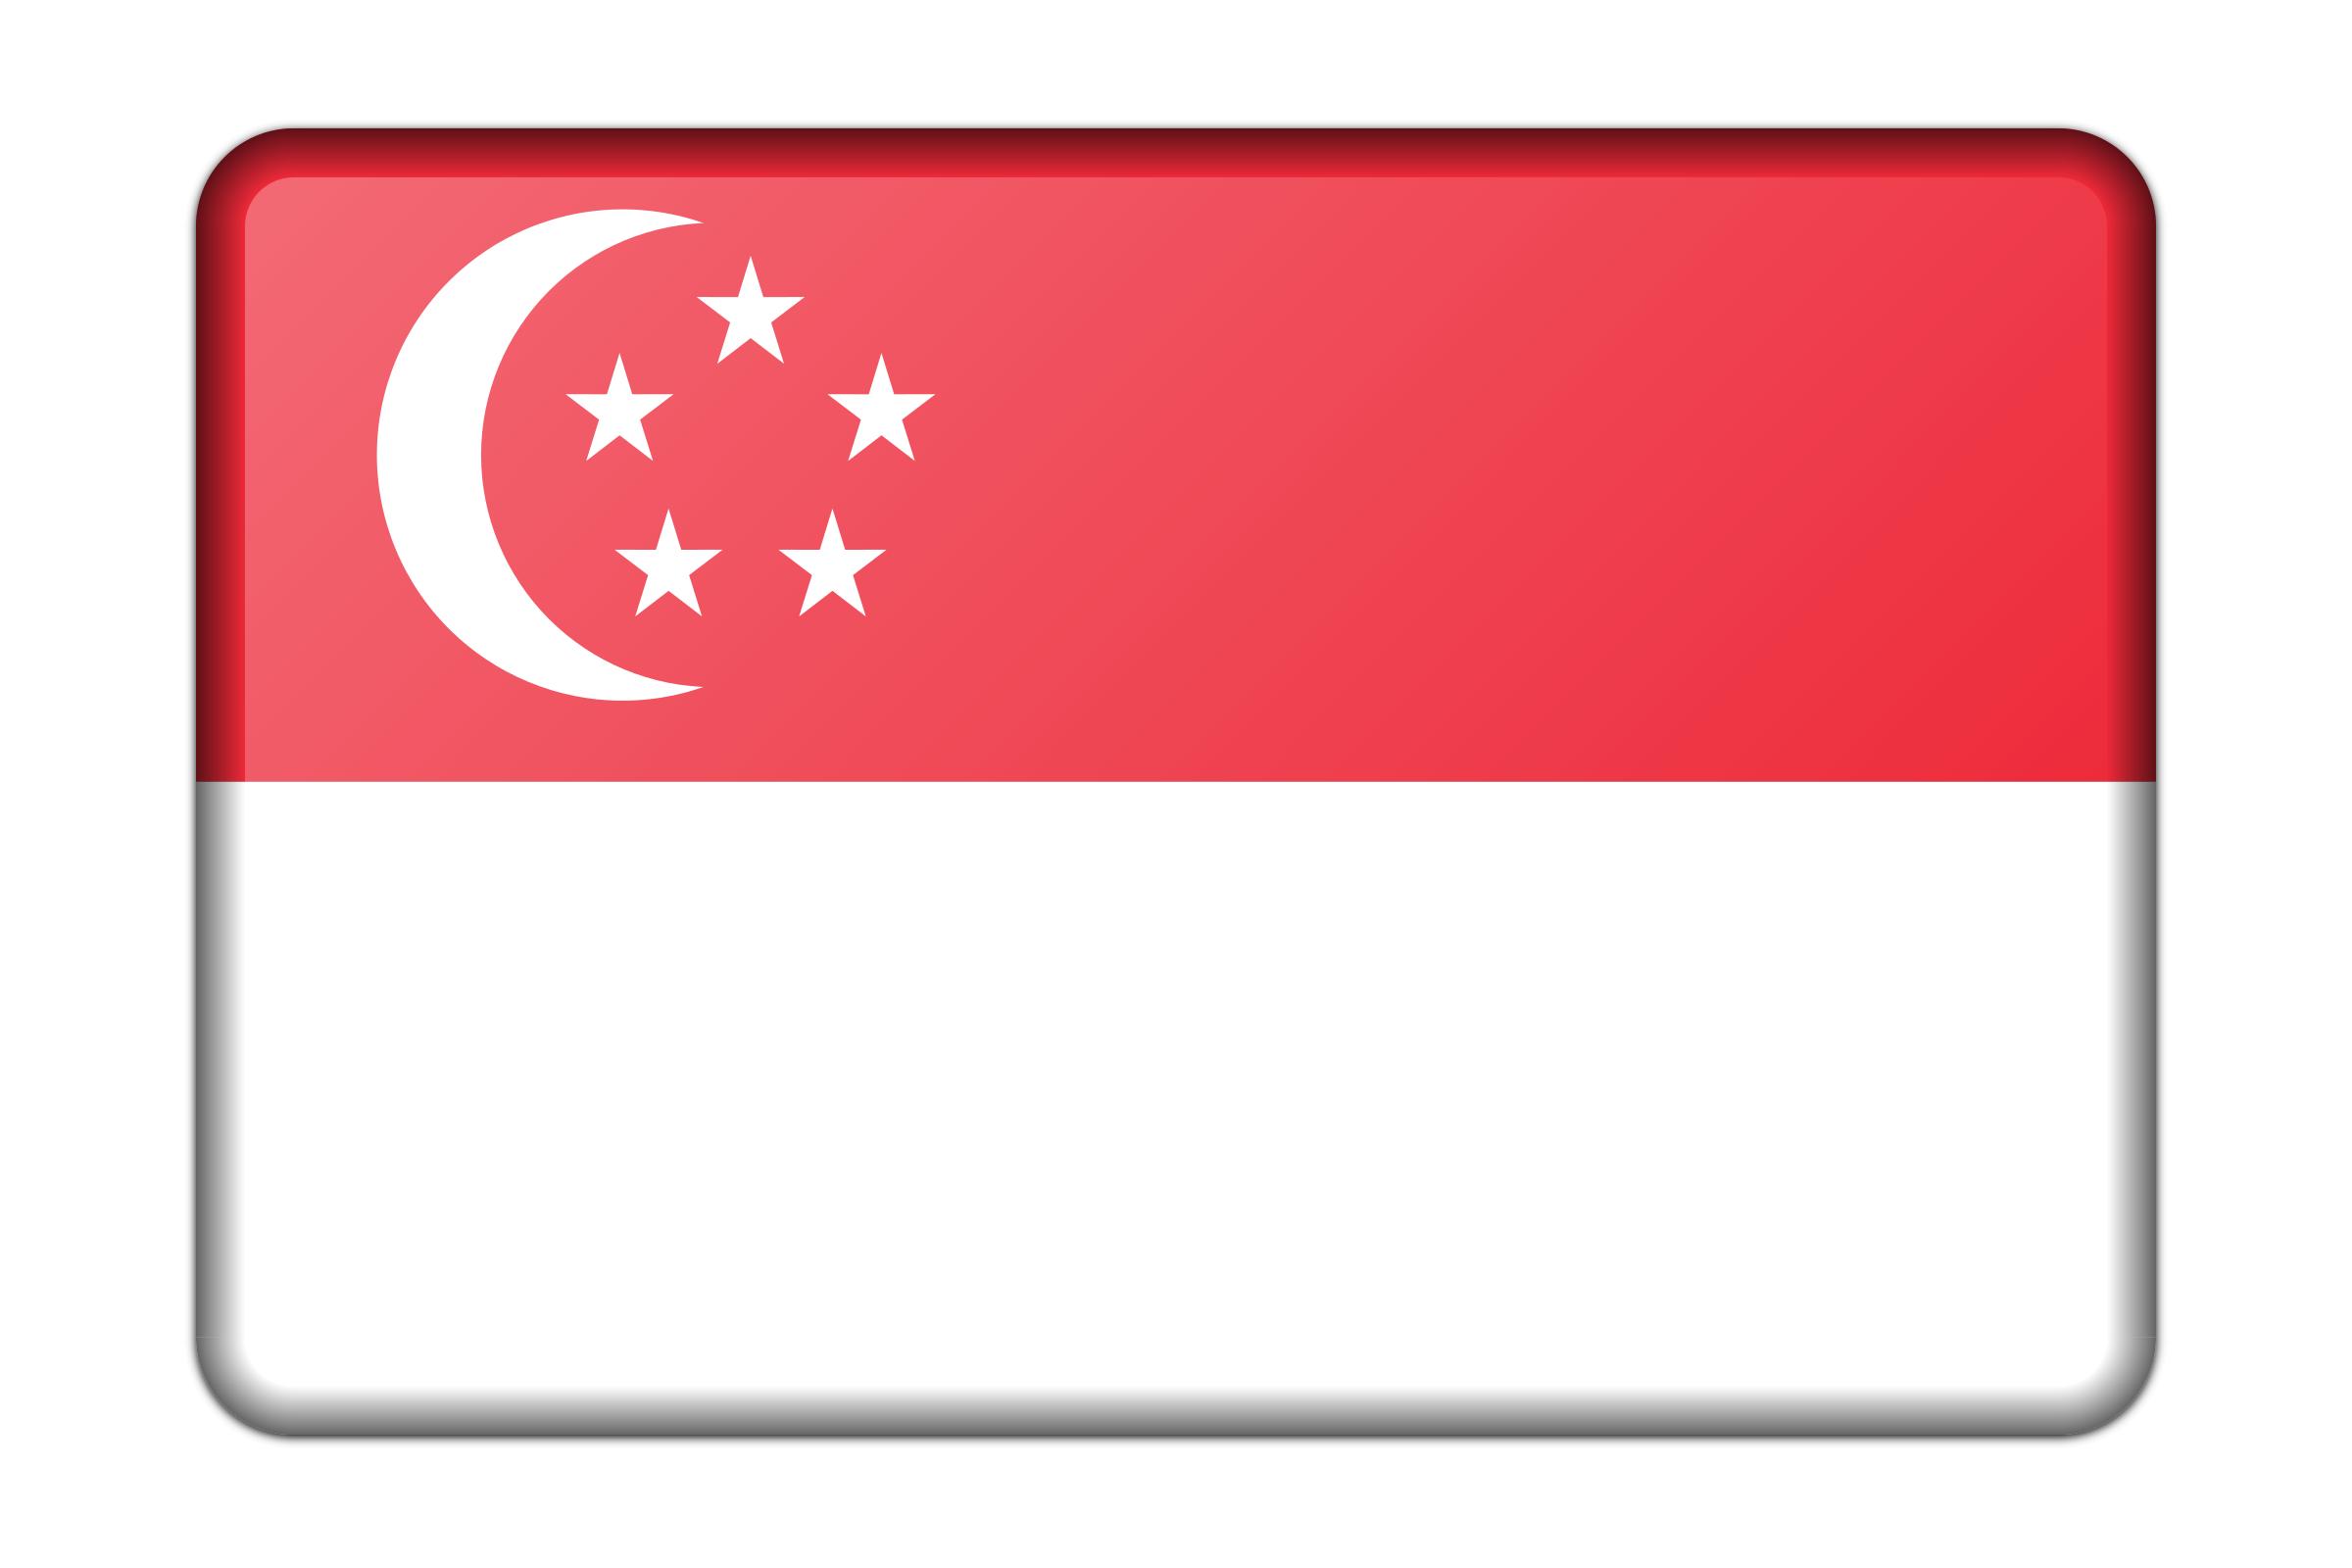 Singapore flag icons